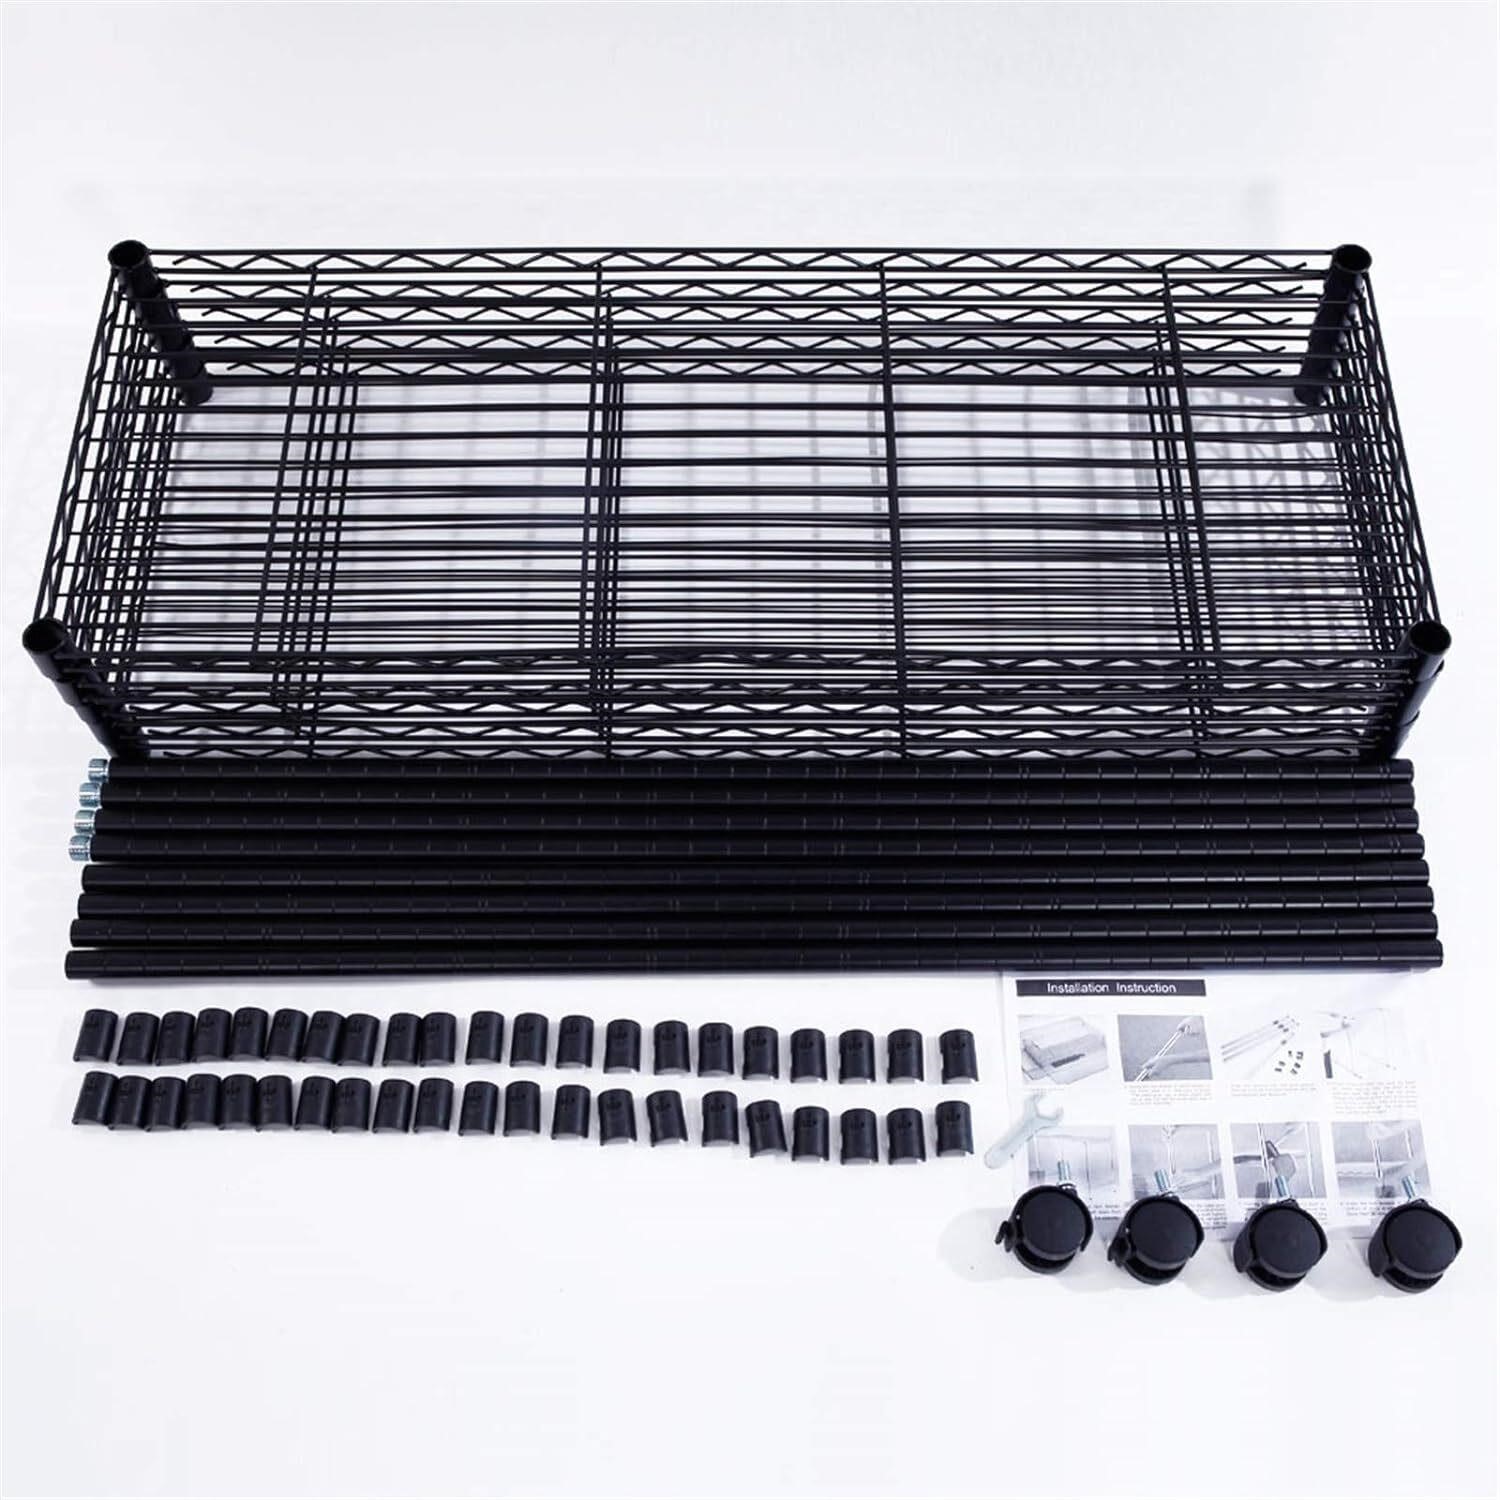 5-Layer Iron Shelf  165*90*35  1.5 Wheels  Black